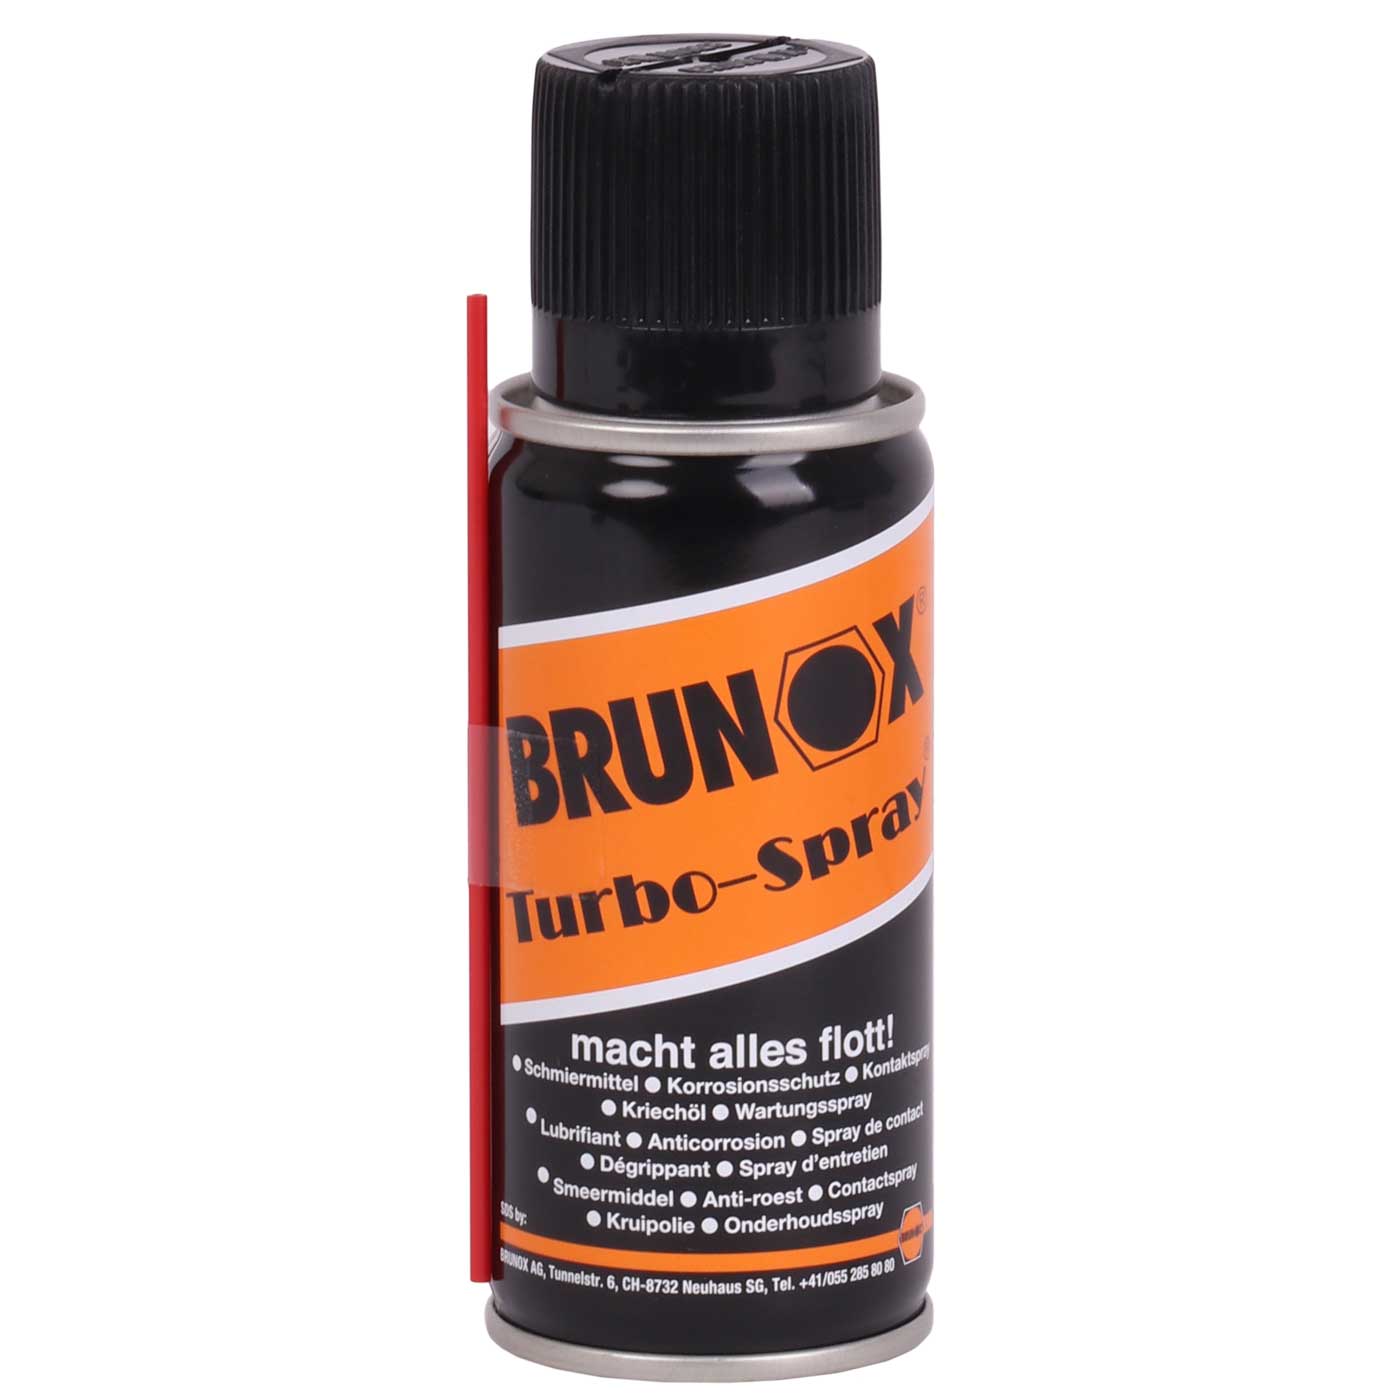 Picture of Brunox Turbo-Spray 100ml